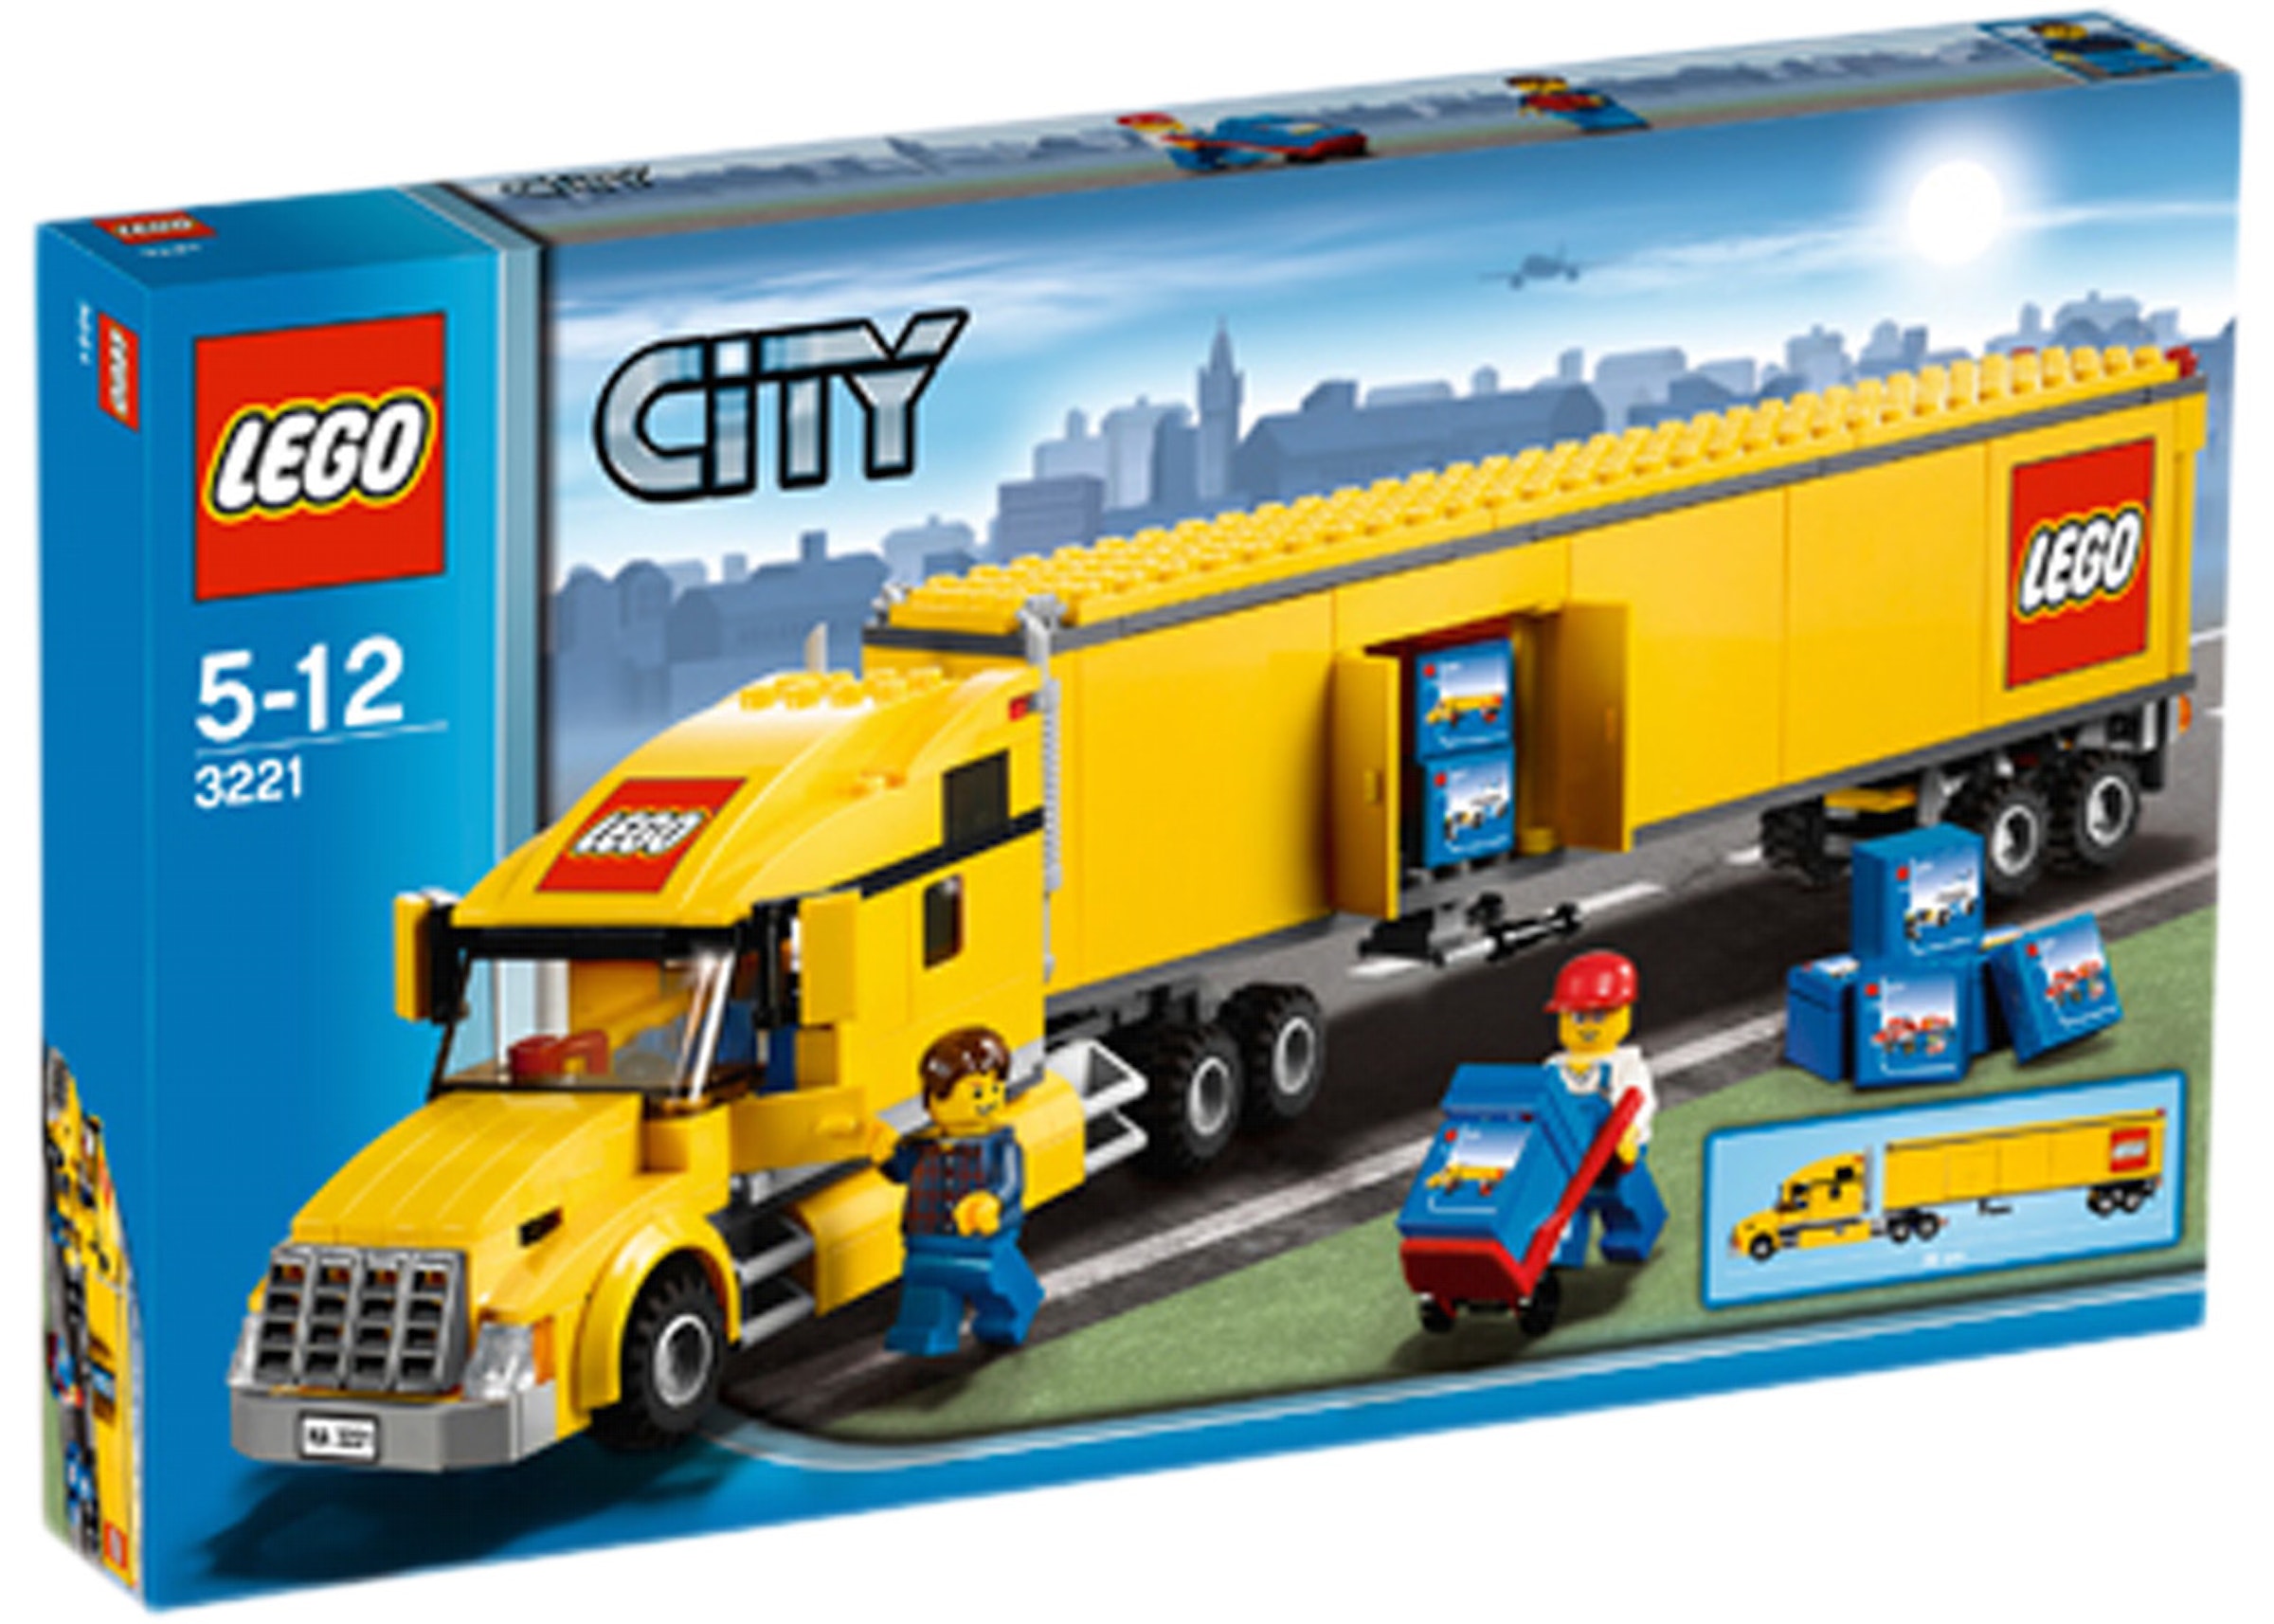 City Truck 3221 - US